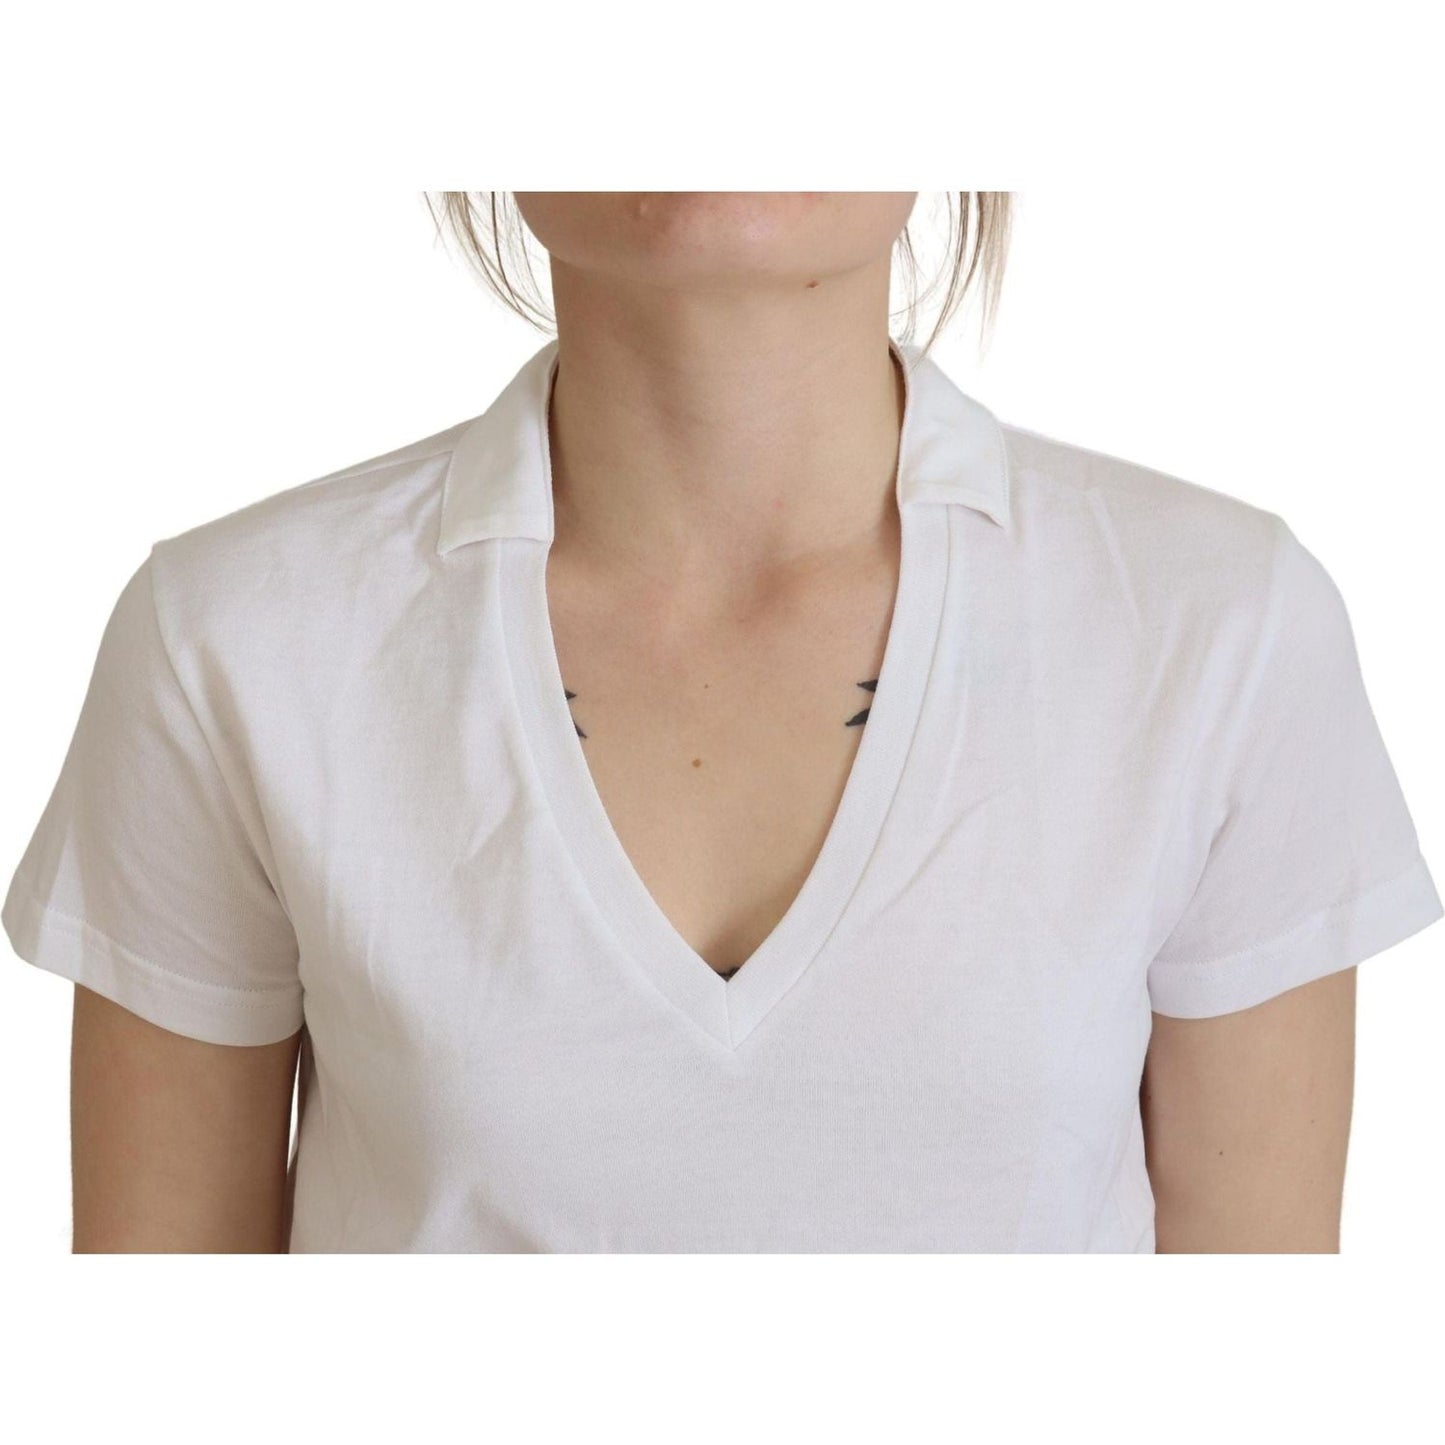 Dolce & Gabbana Elegant White Cotton Top Tee white-short-sleeve-v-neck-cotton-top-blouse-t-shirt